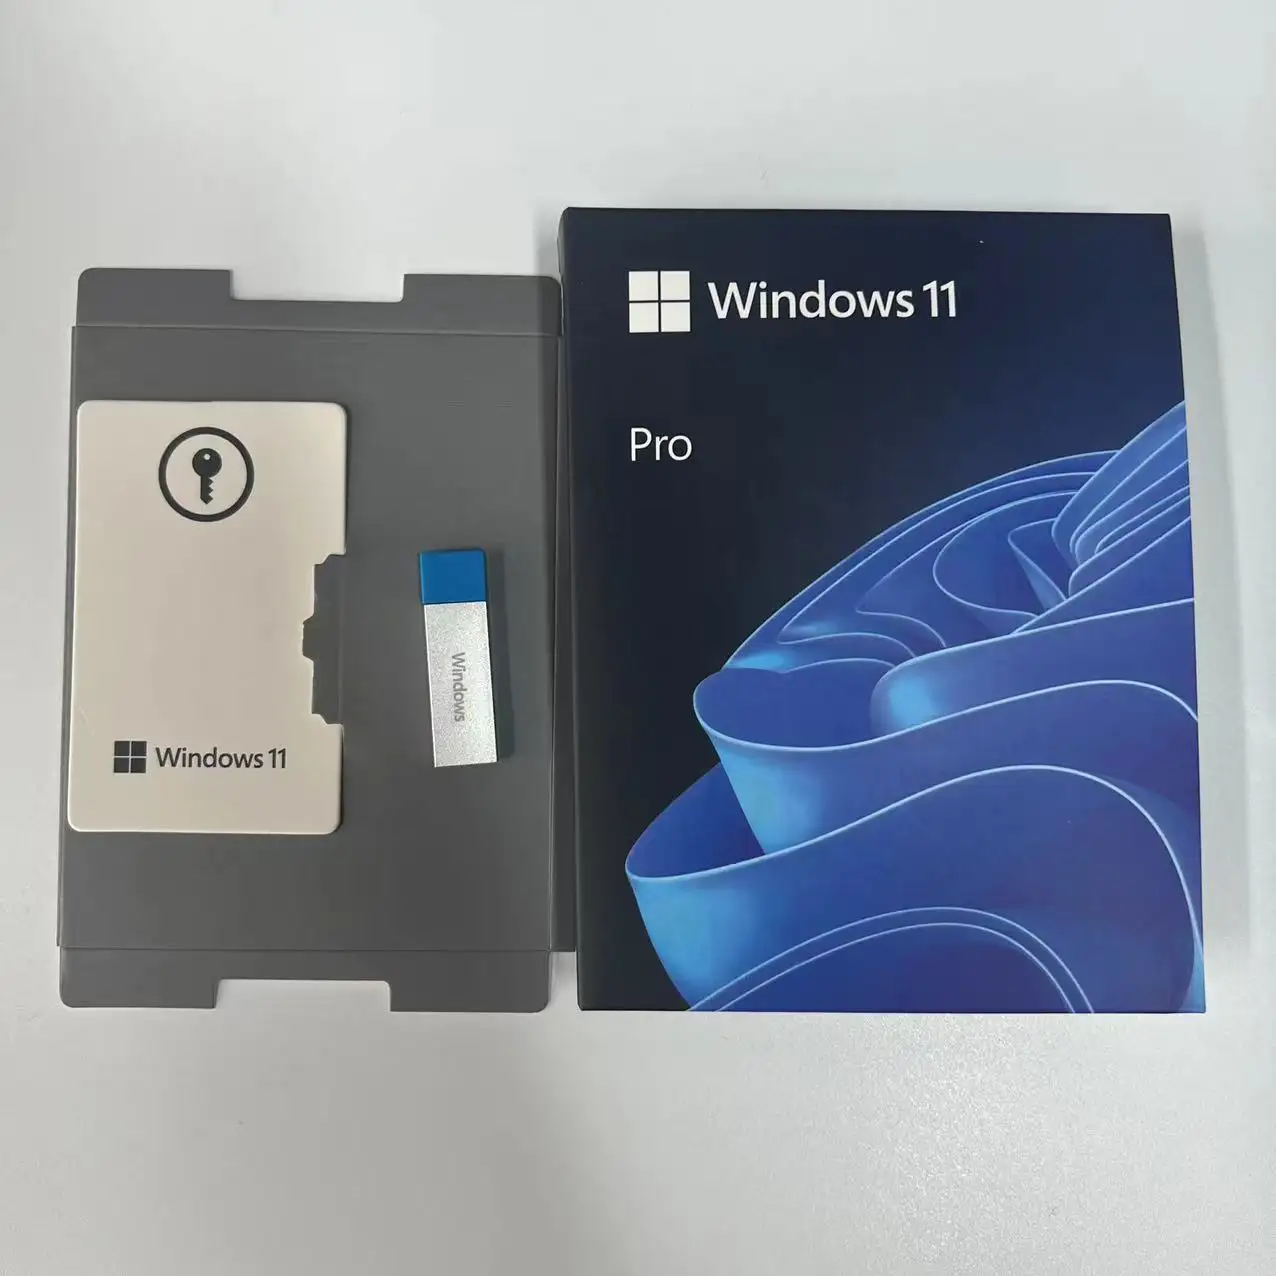 Windows 11 USB 12 Months Guaranteed Windows 11 Pro Box Package DHL Free Shipping , Windows 11 Pro USB